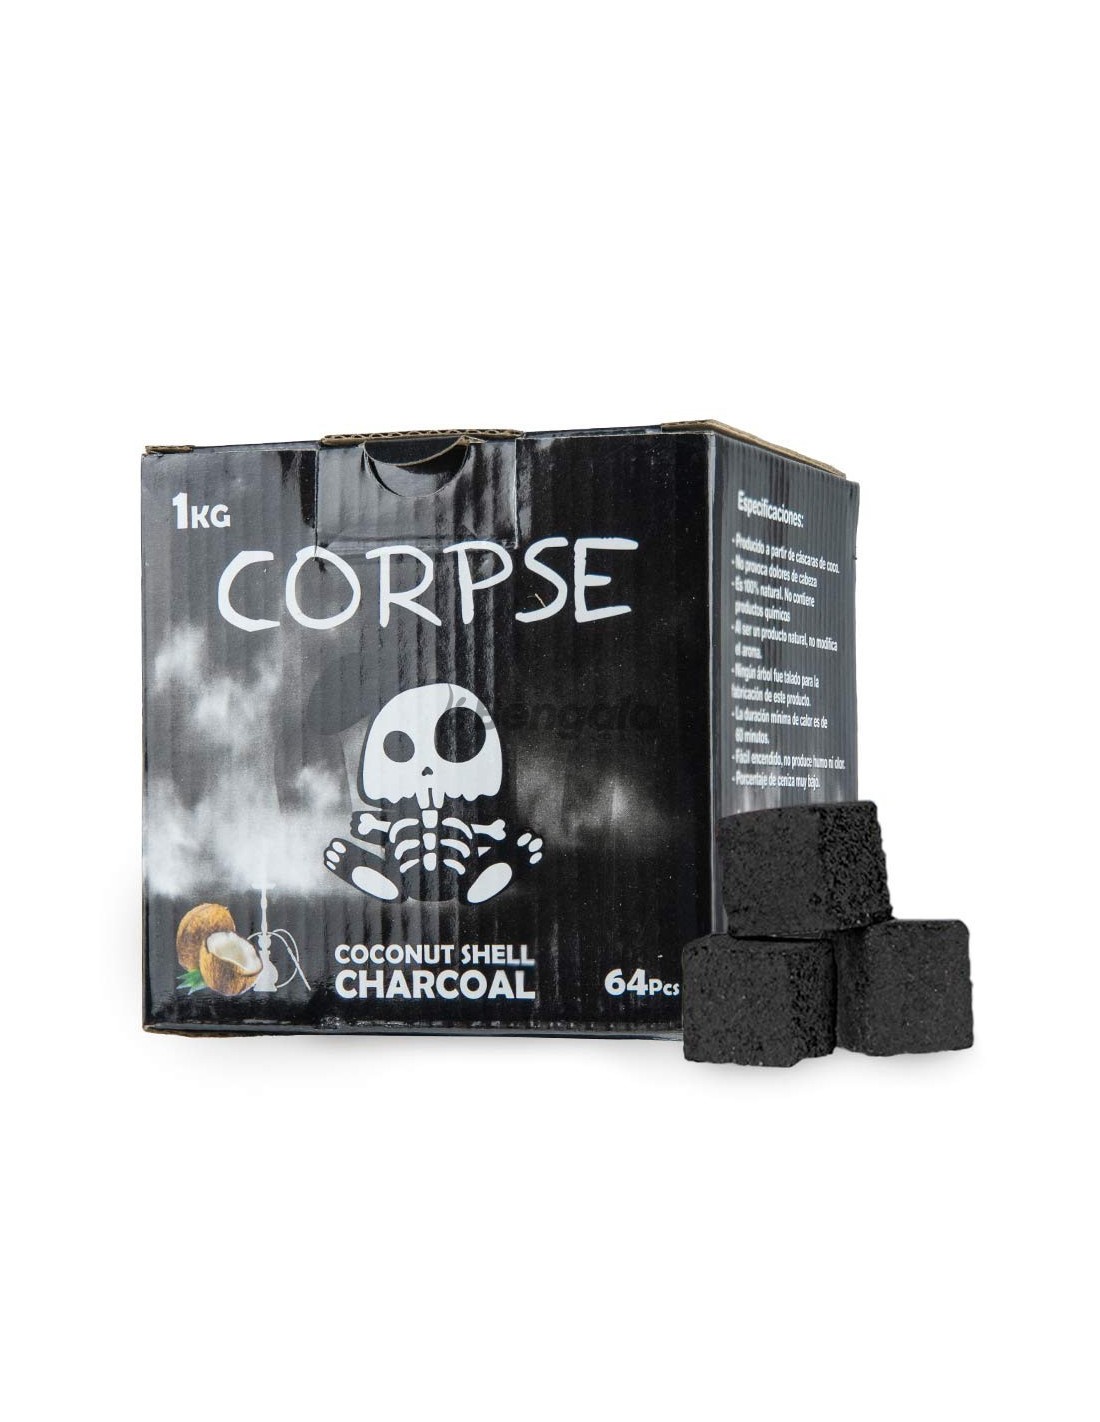 Carbones naturales CORPSE (28mm) - 1kg